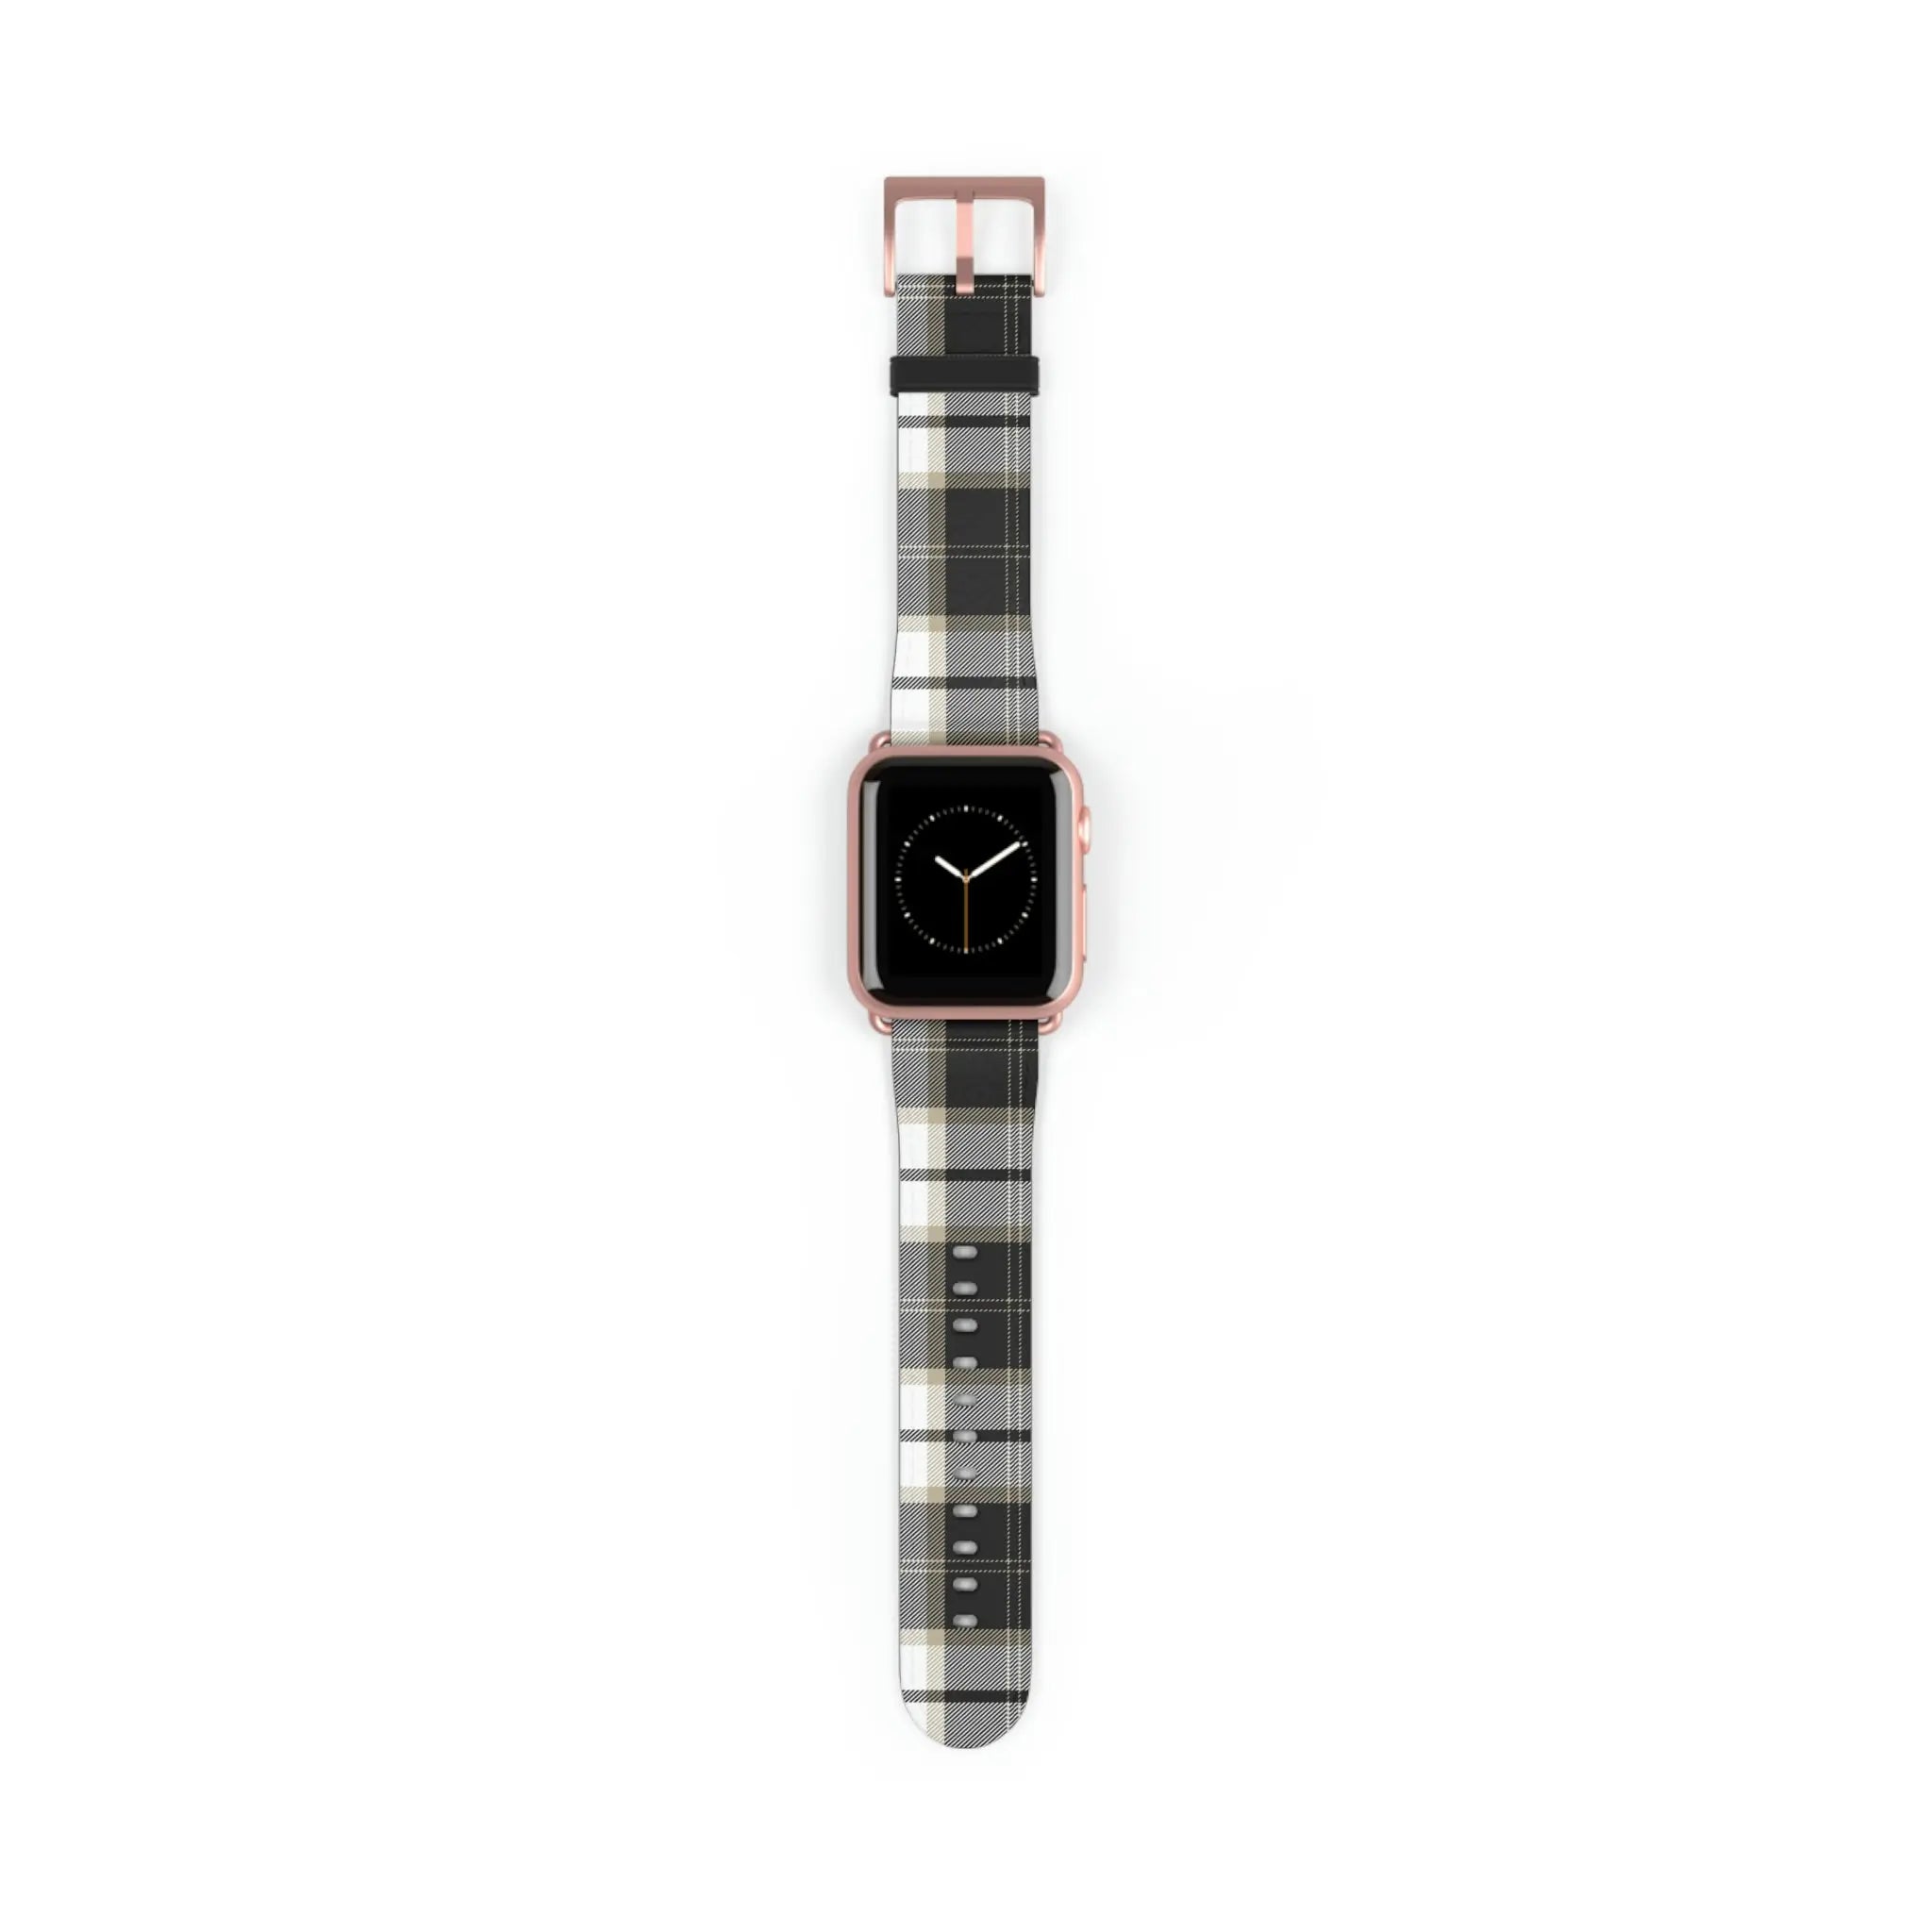  Designer Collection in Plaid (Grey Mix) Apple Watch Band Watch Band38-41mmRoseGoldMatte